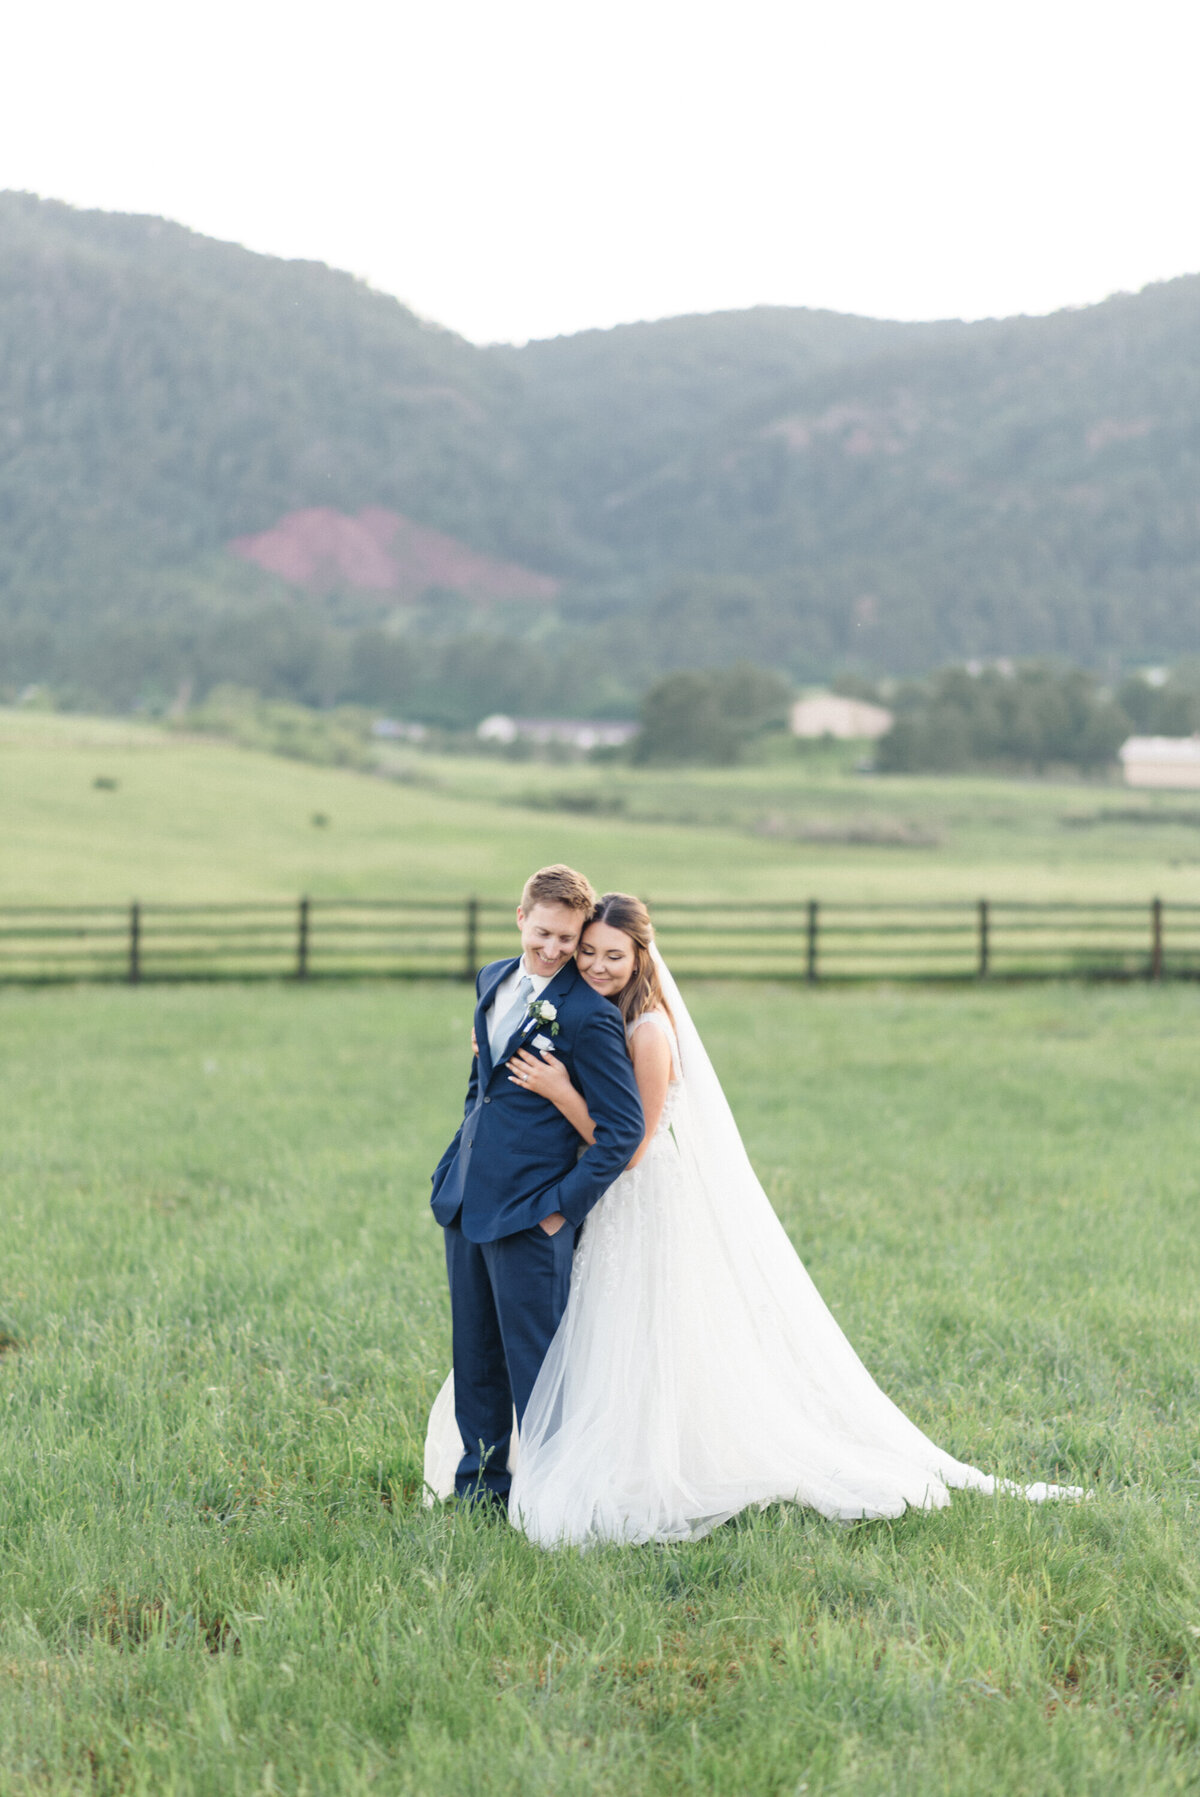 Summer dusty blue wedding at Spruce Mountain Ranch, Larkspur, Colorado. Bride & groom sunset portraits.